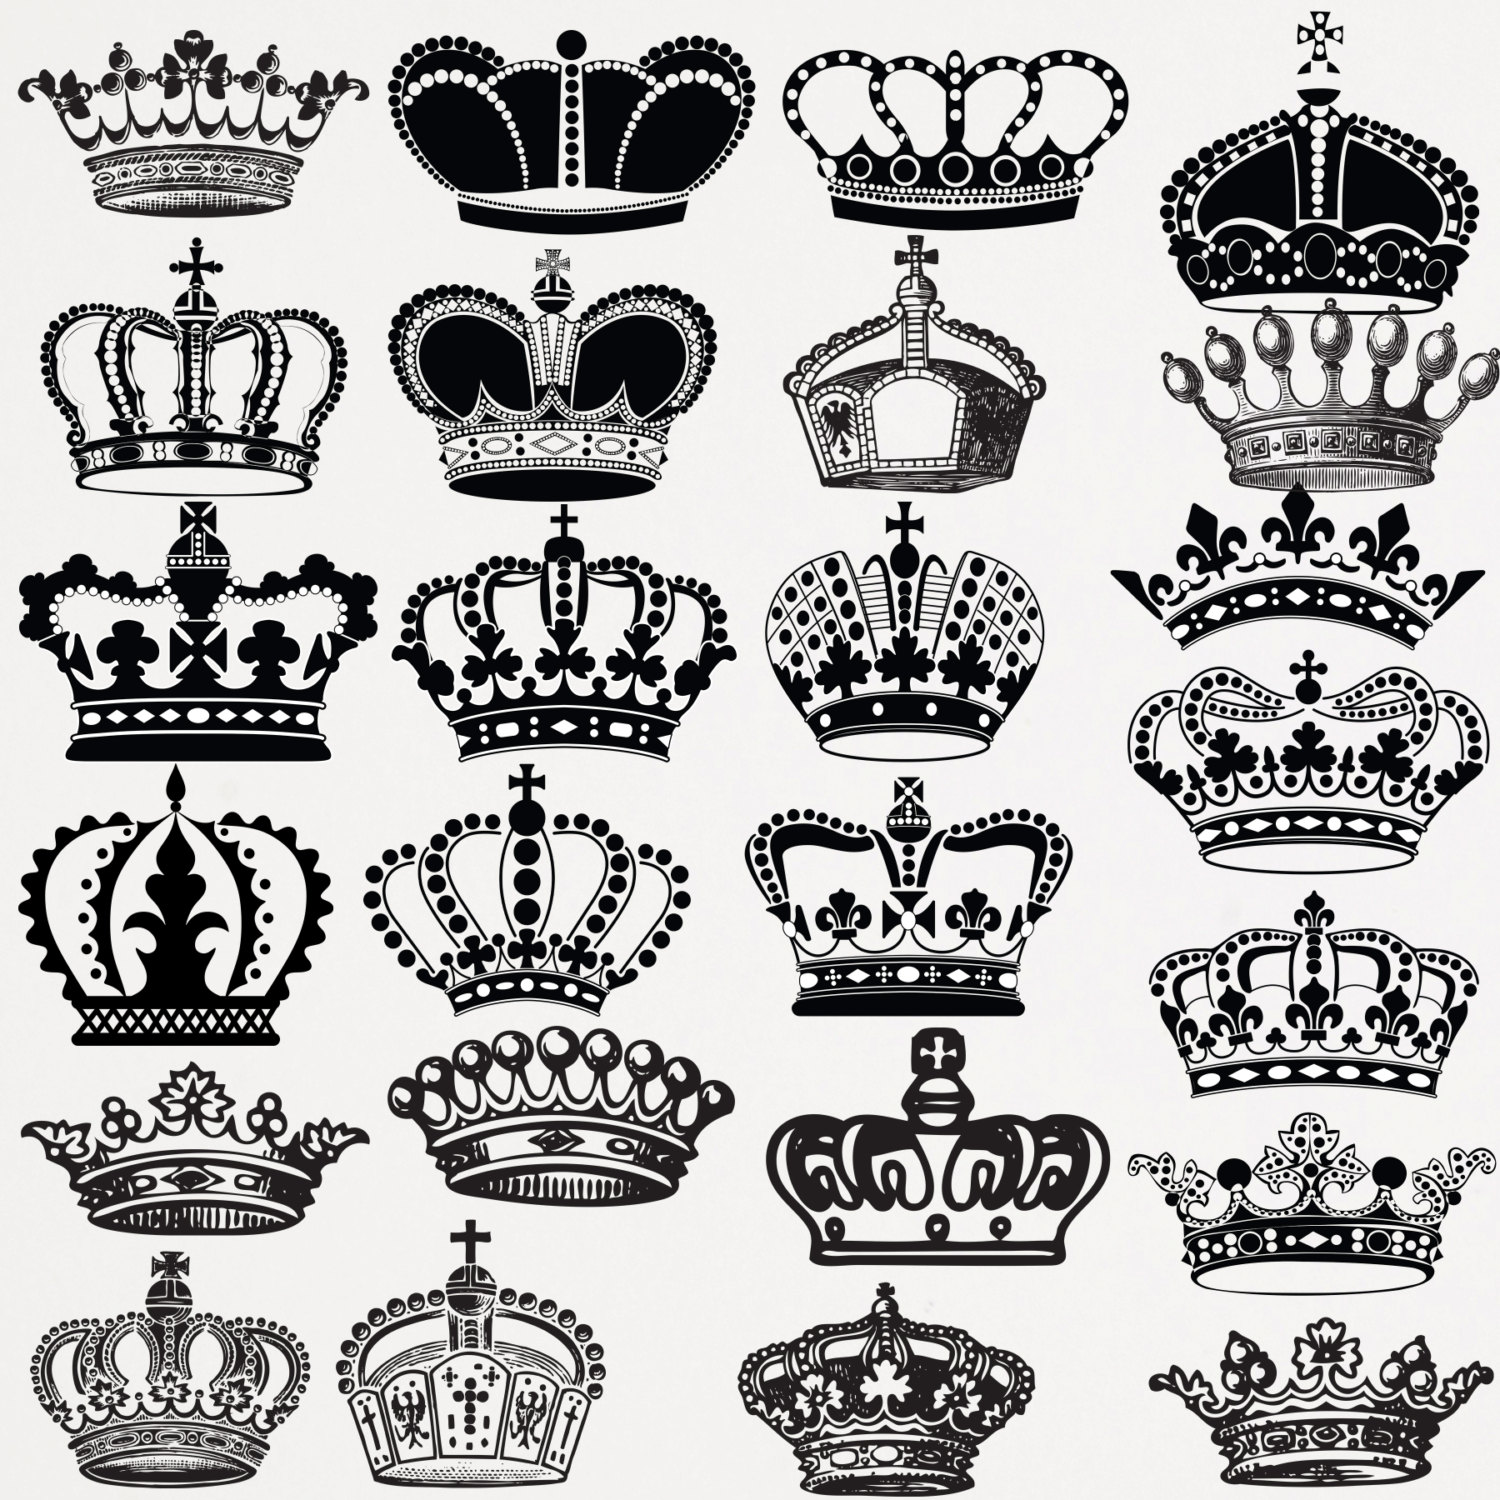 Royal crown image clip art 